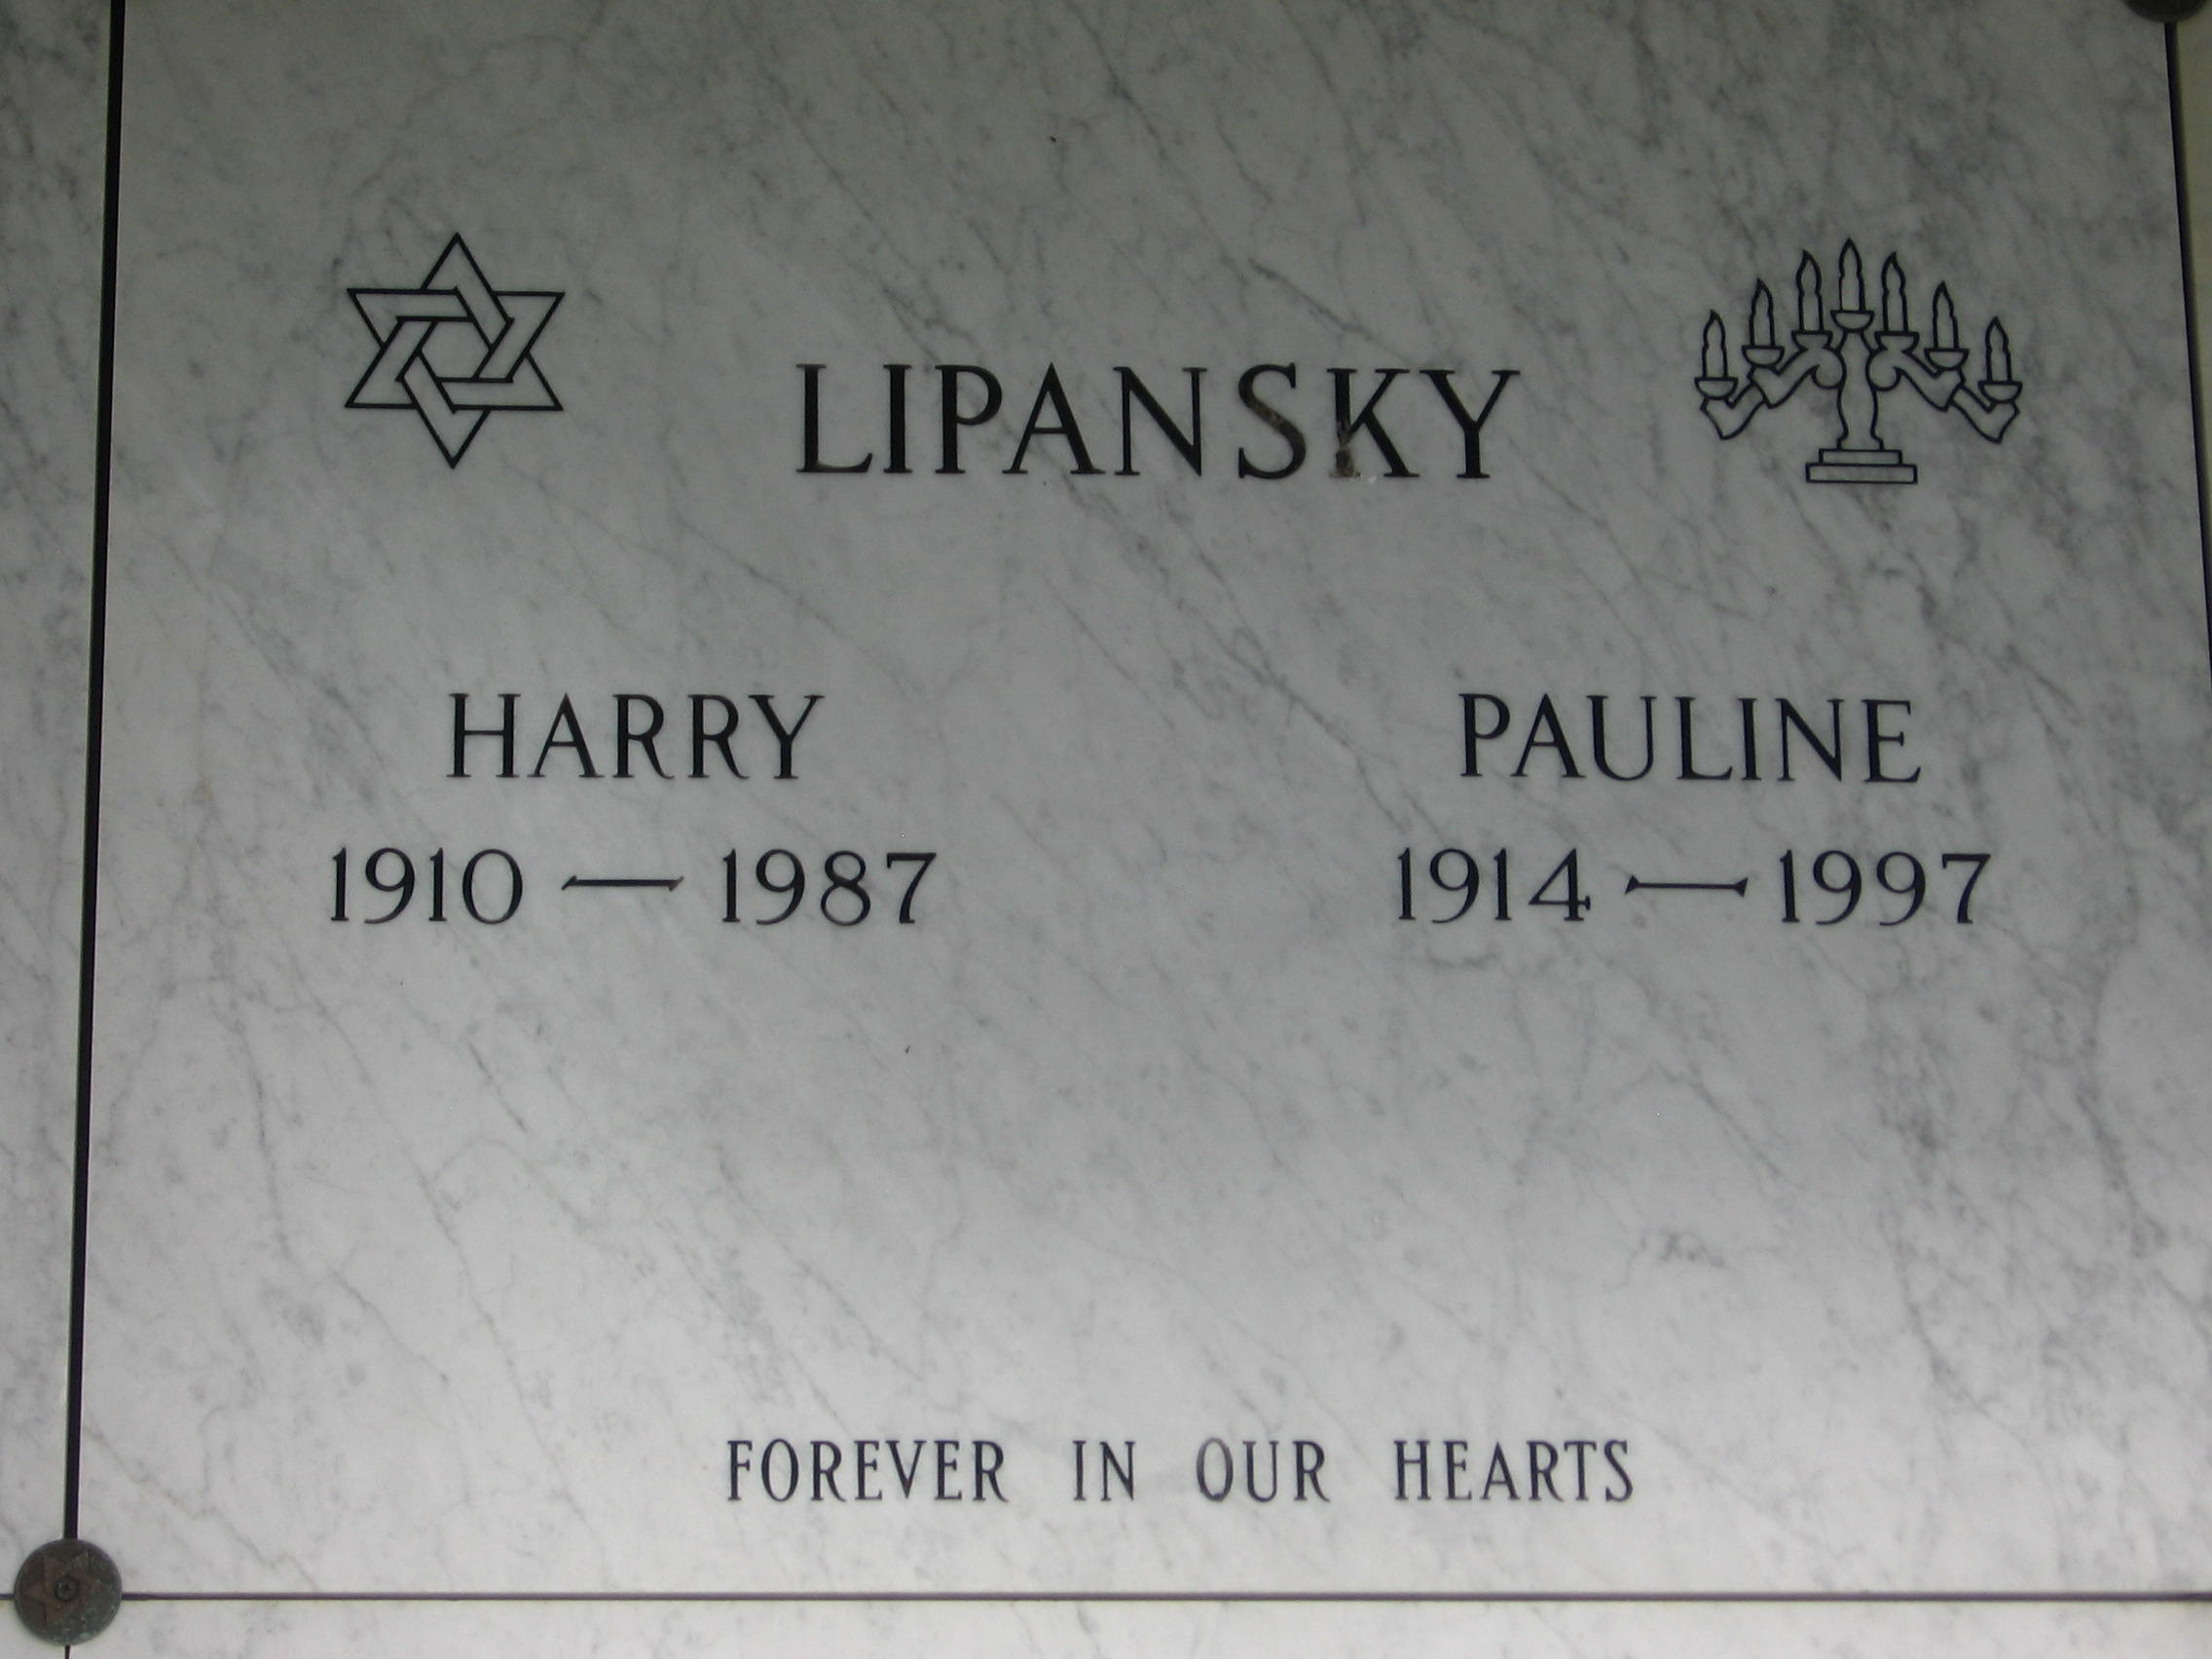 Harry Lipansky